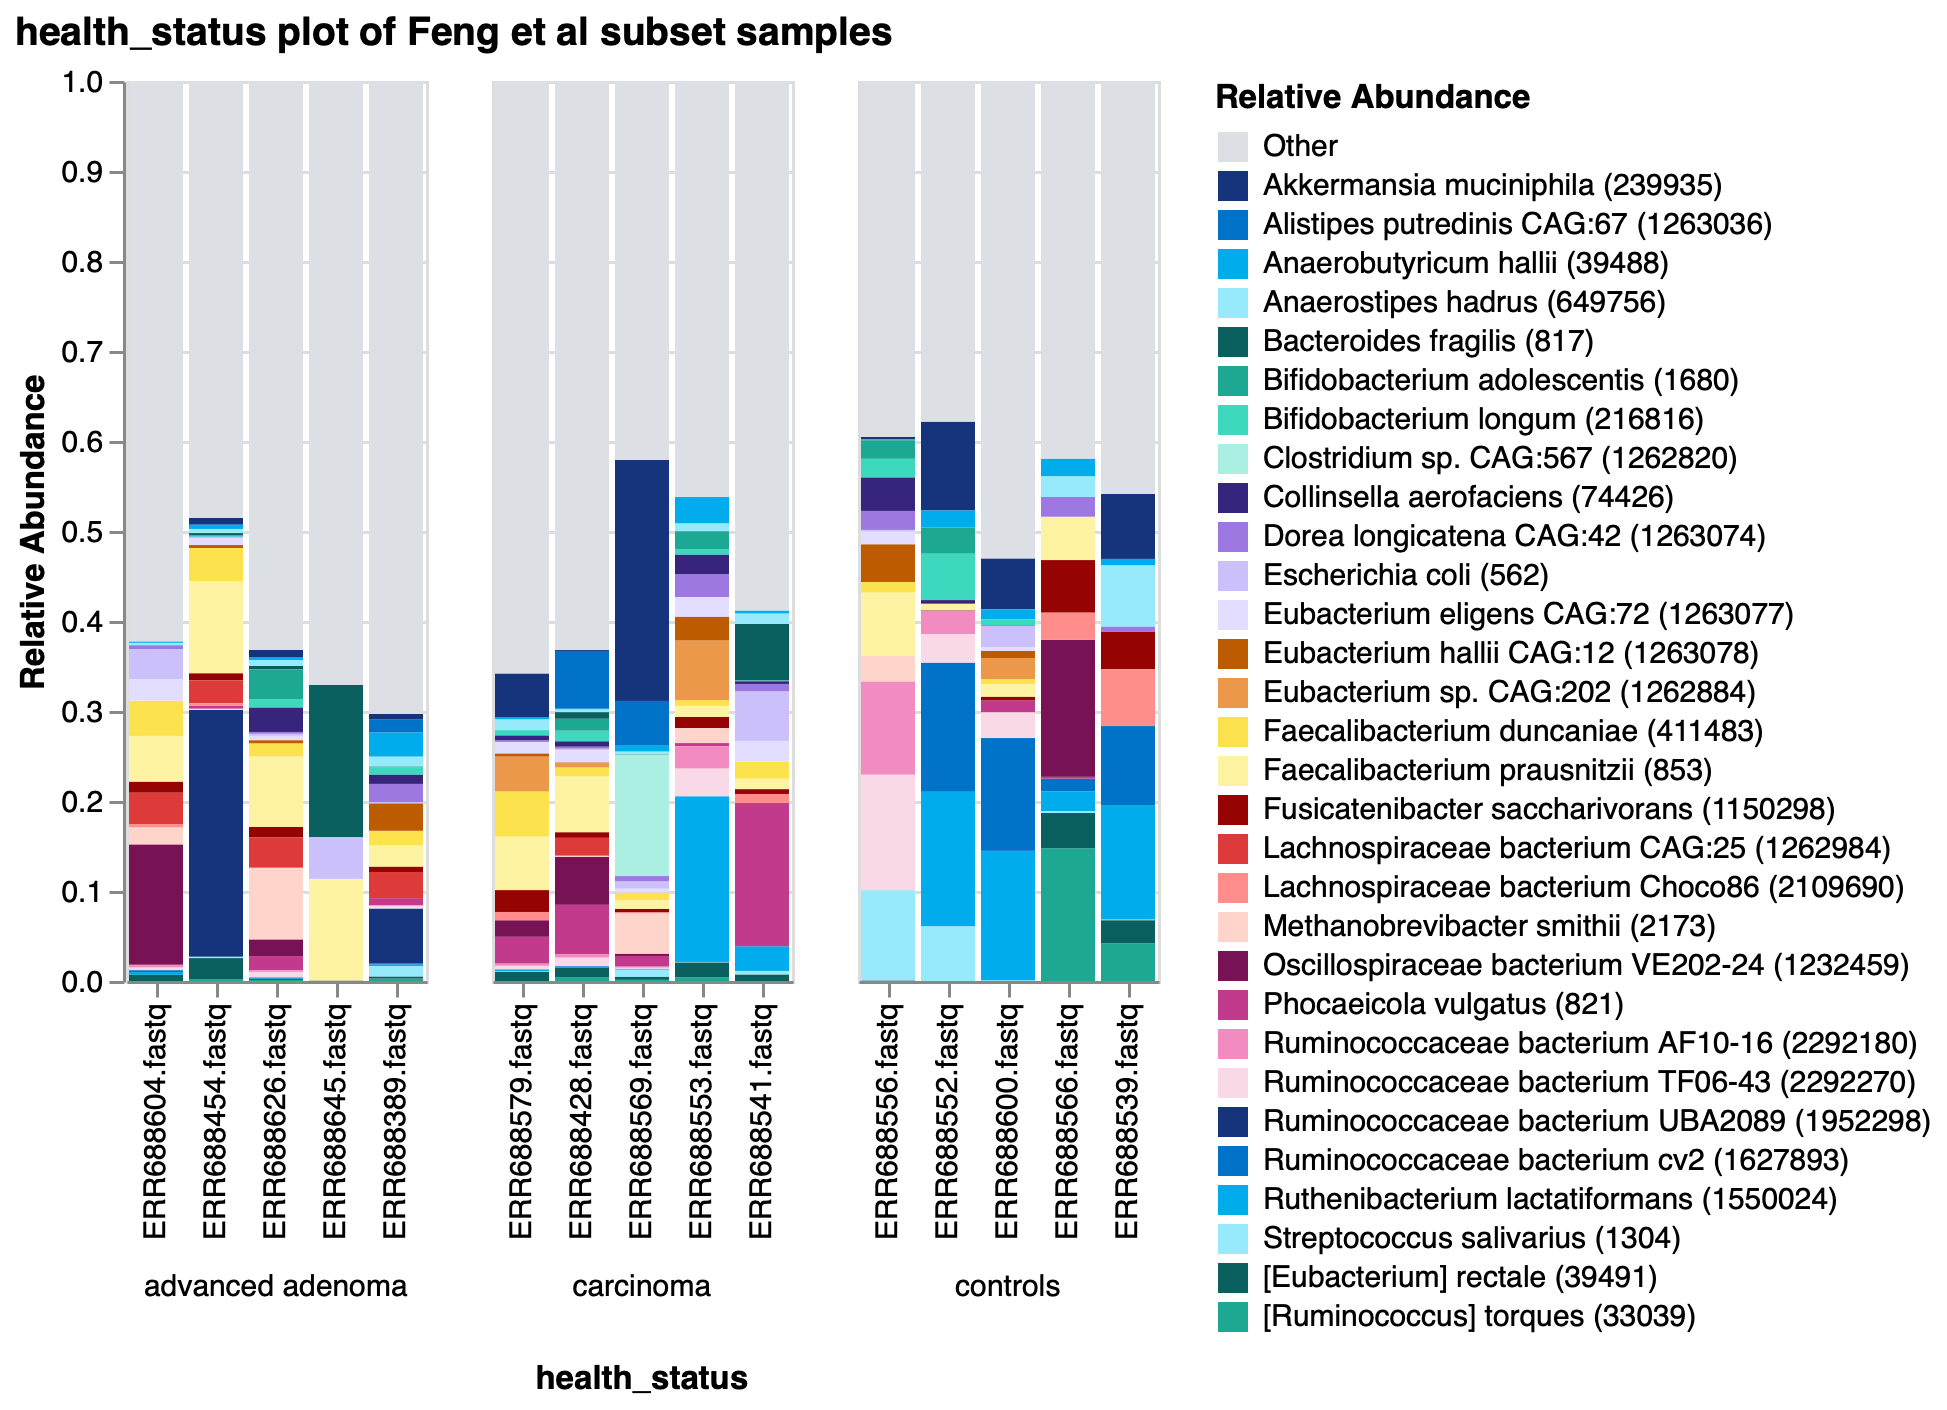 Figure 3: Taxonomic barplot of 30 most abundant species in a subset of Feng et al samples.